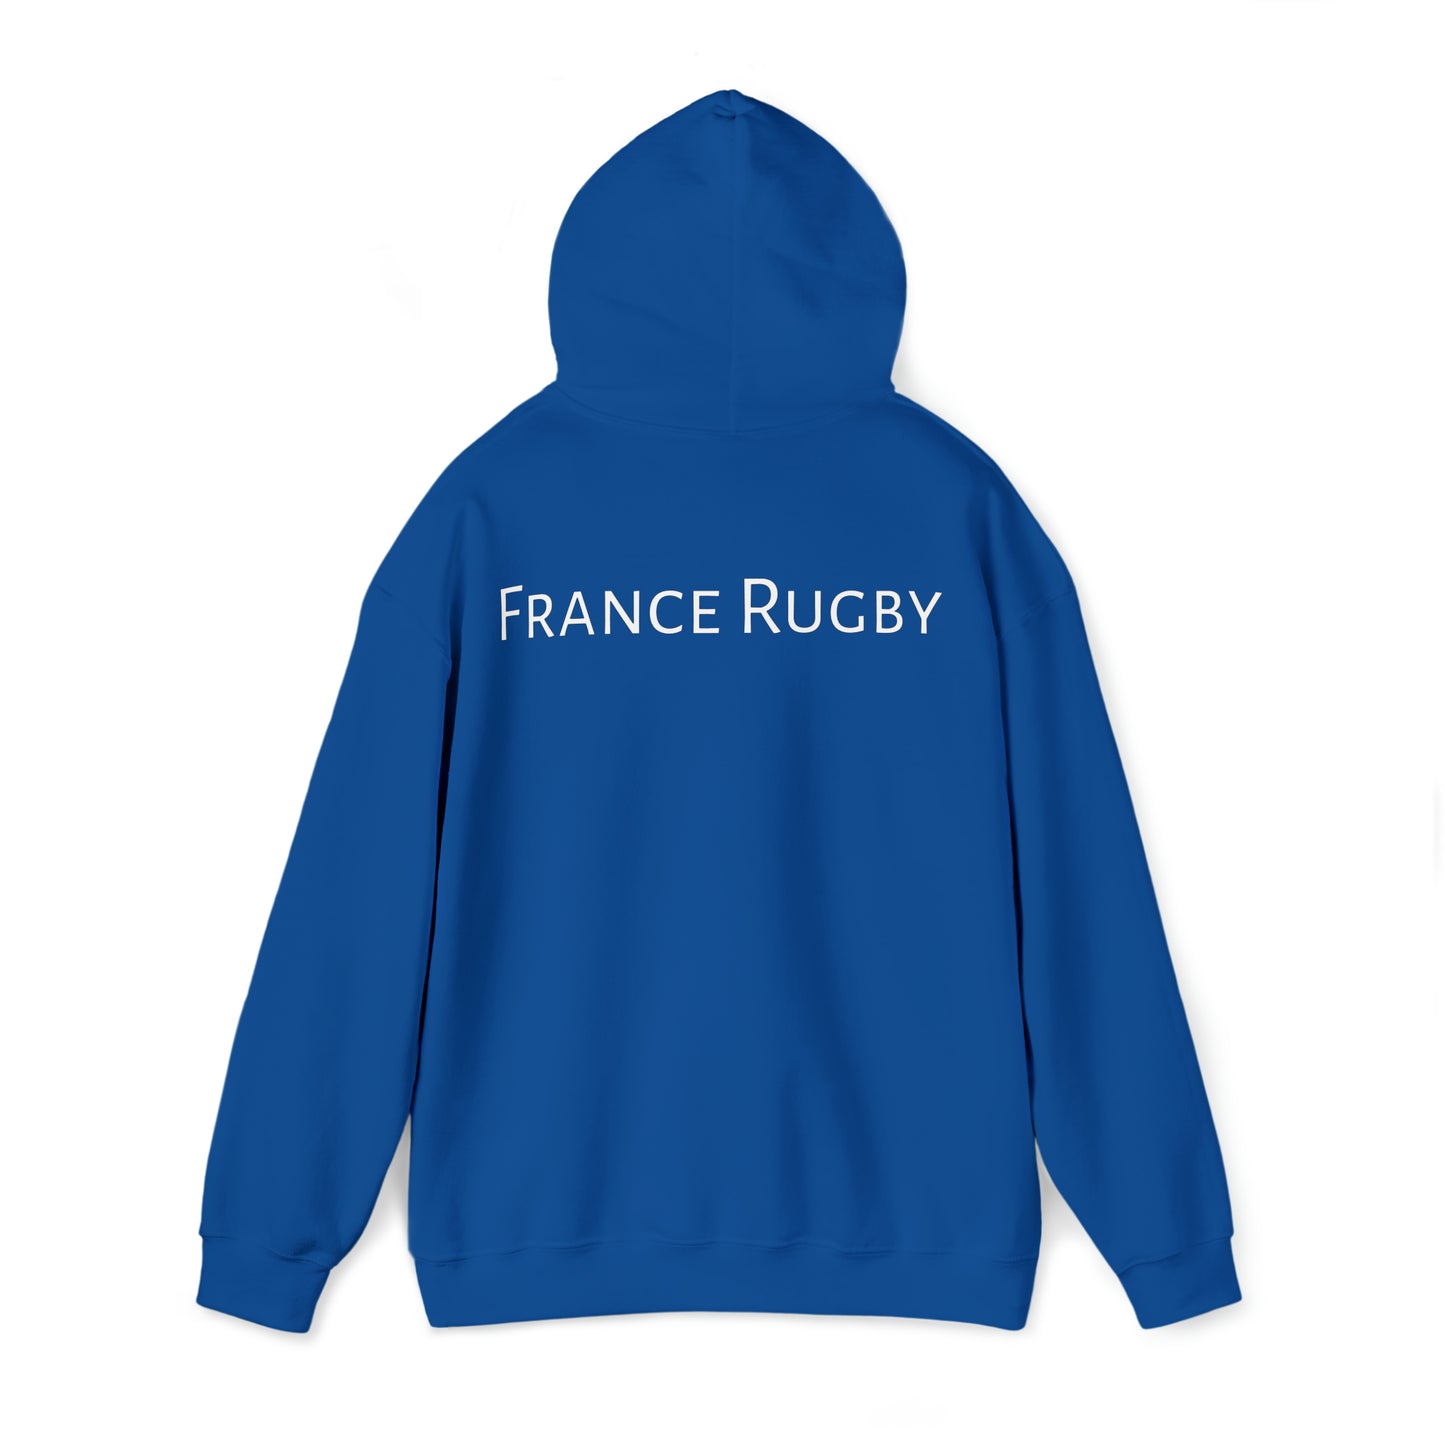 Post Match France - dark hoodies